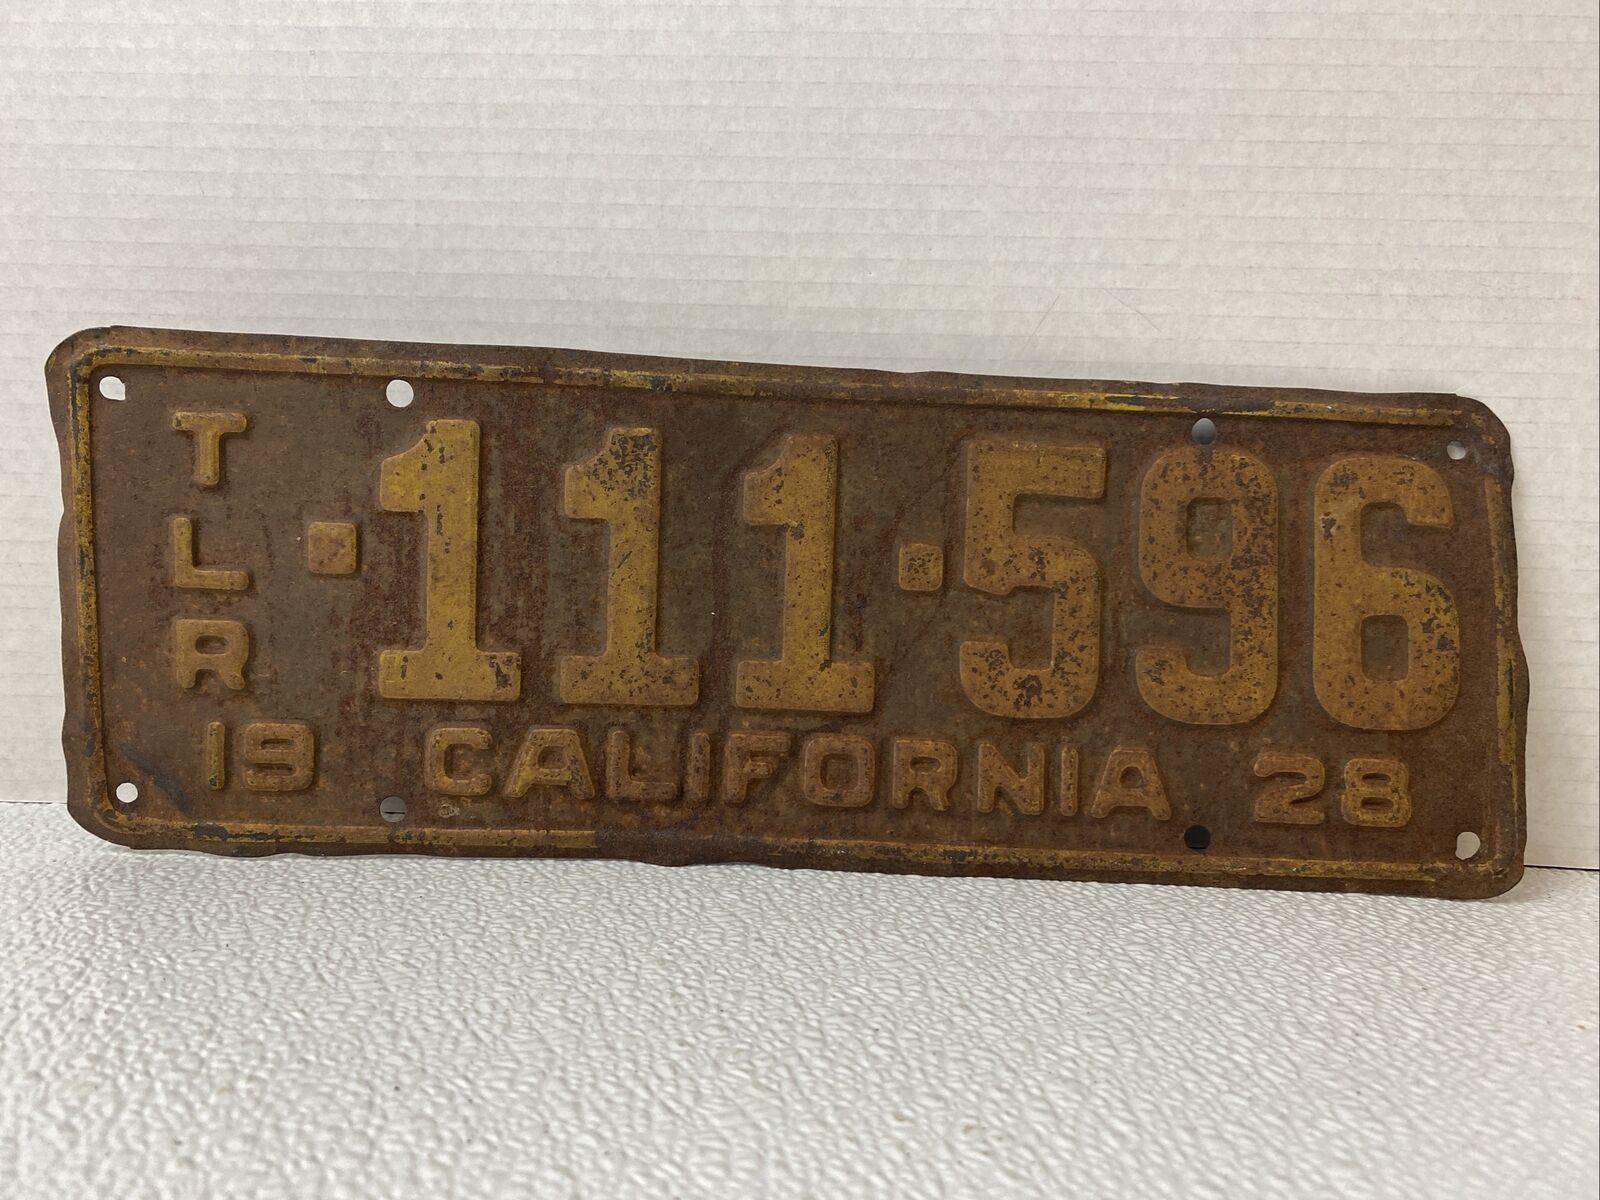 1928 California Trailer License Plate 111-596 Collectible Rustic